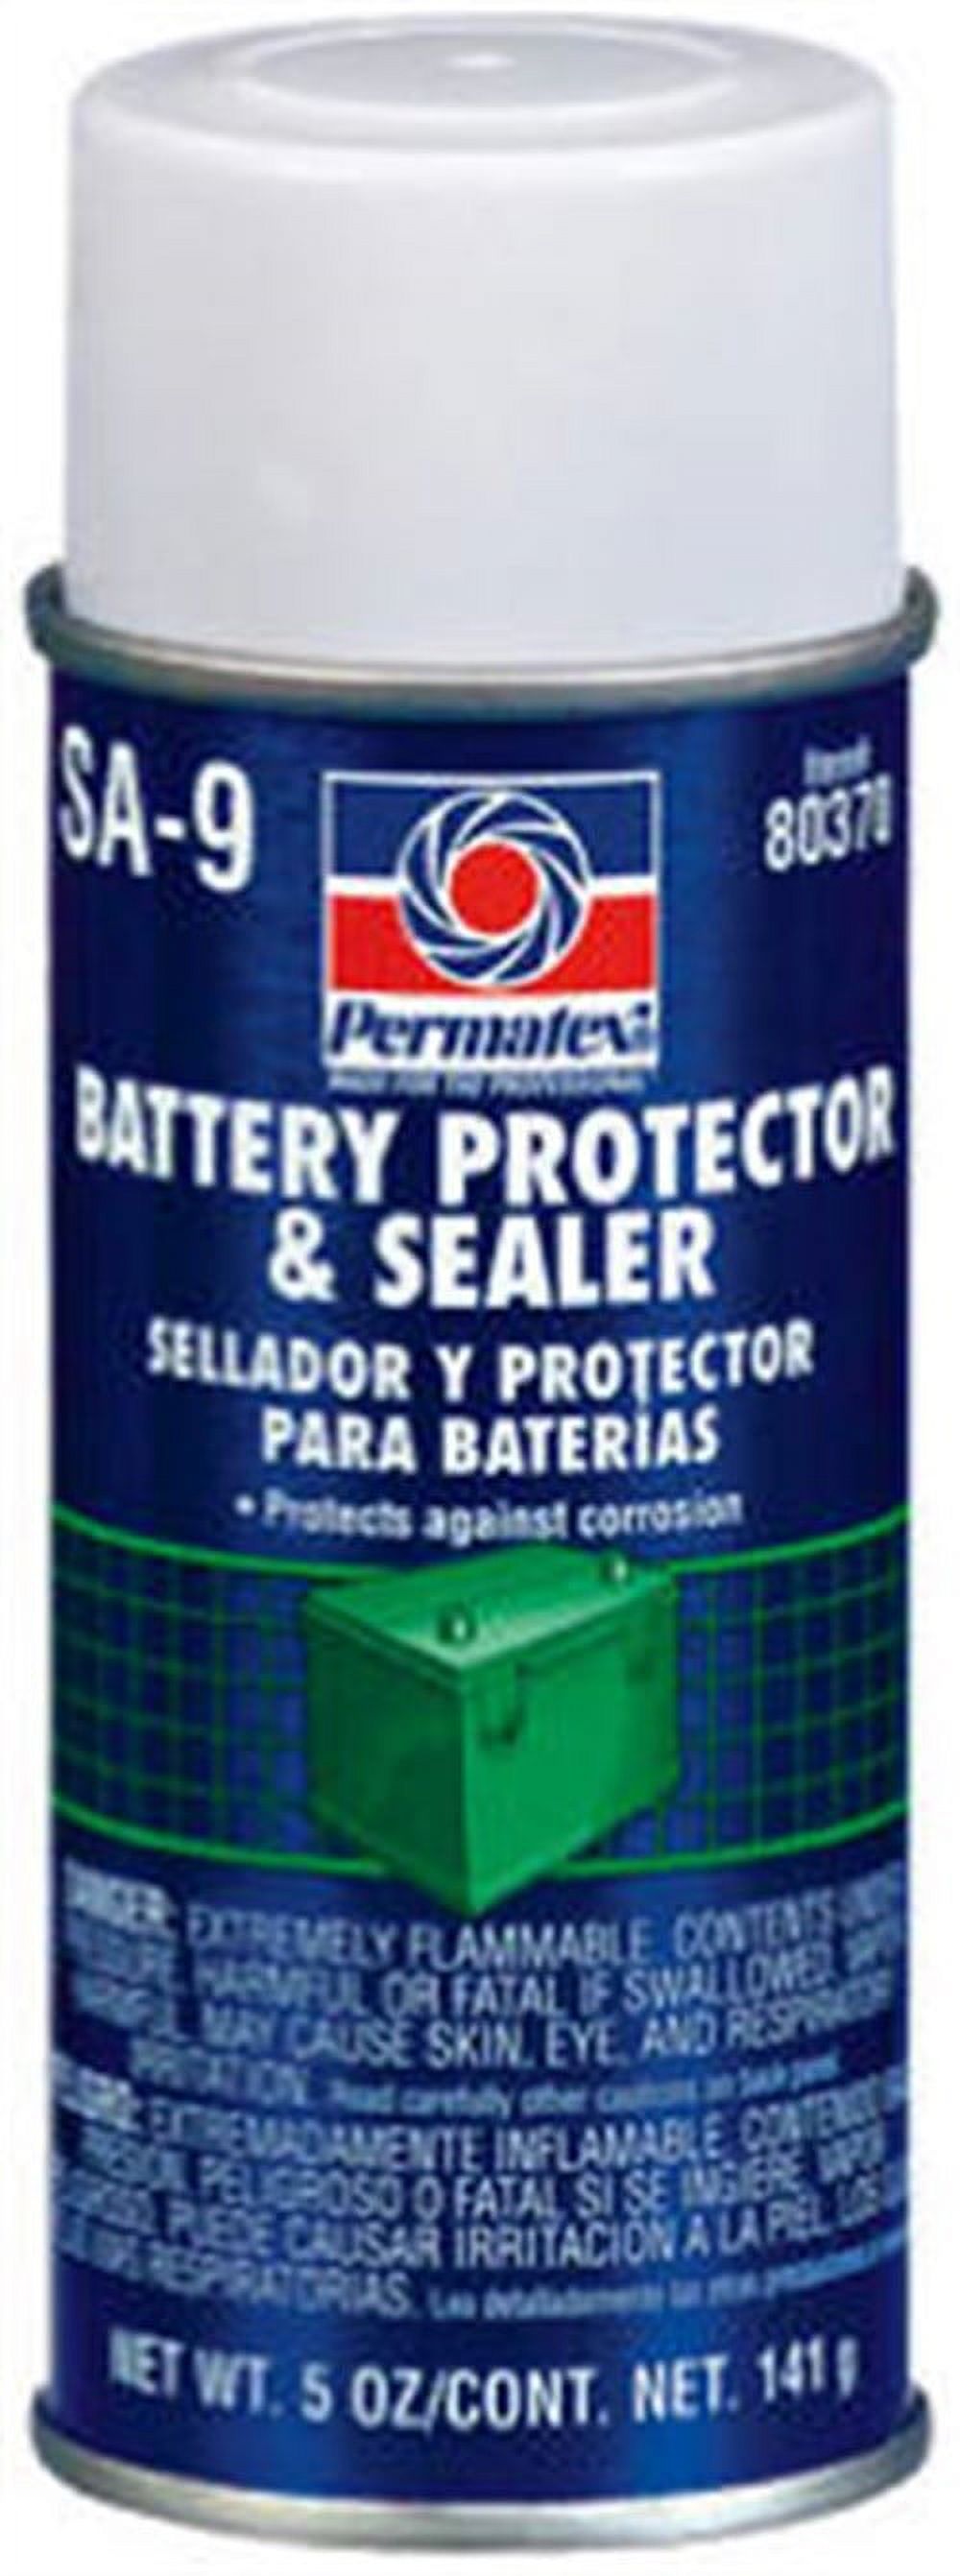 Permatex Automotive Battery Protector / Sealant Spray - 5 Oz Can 80370 - image 2 of 2